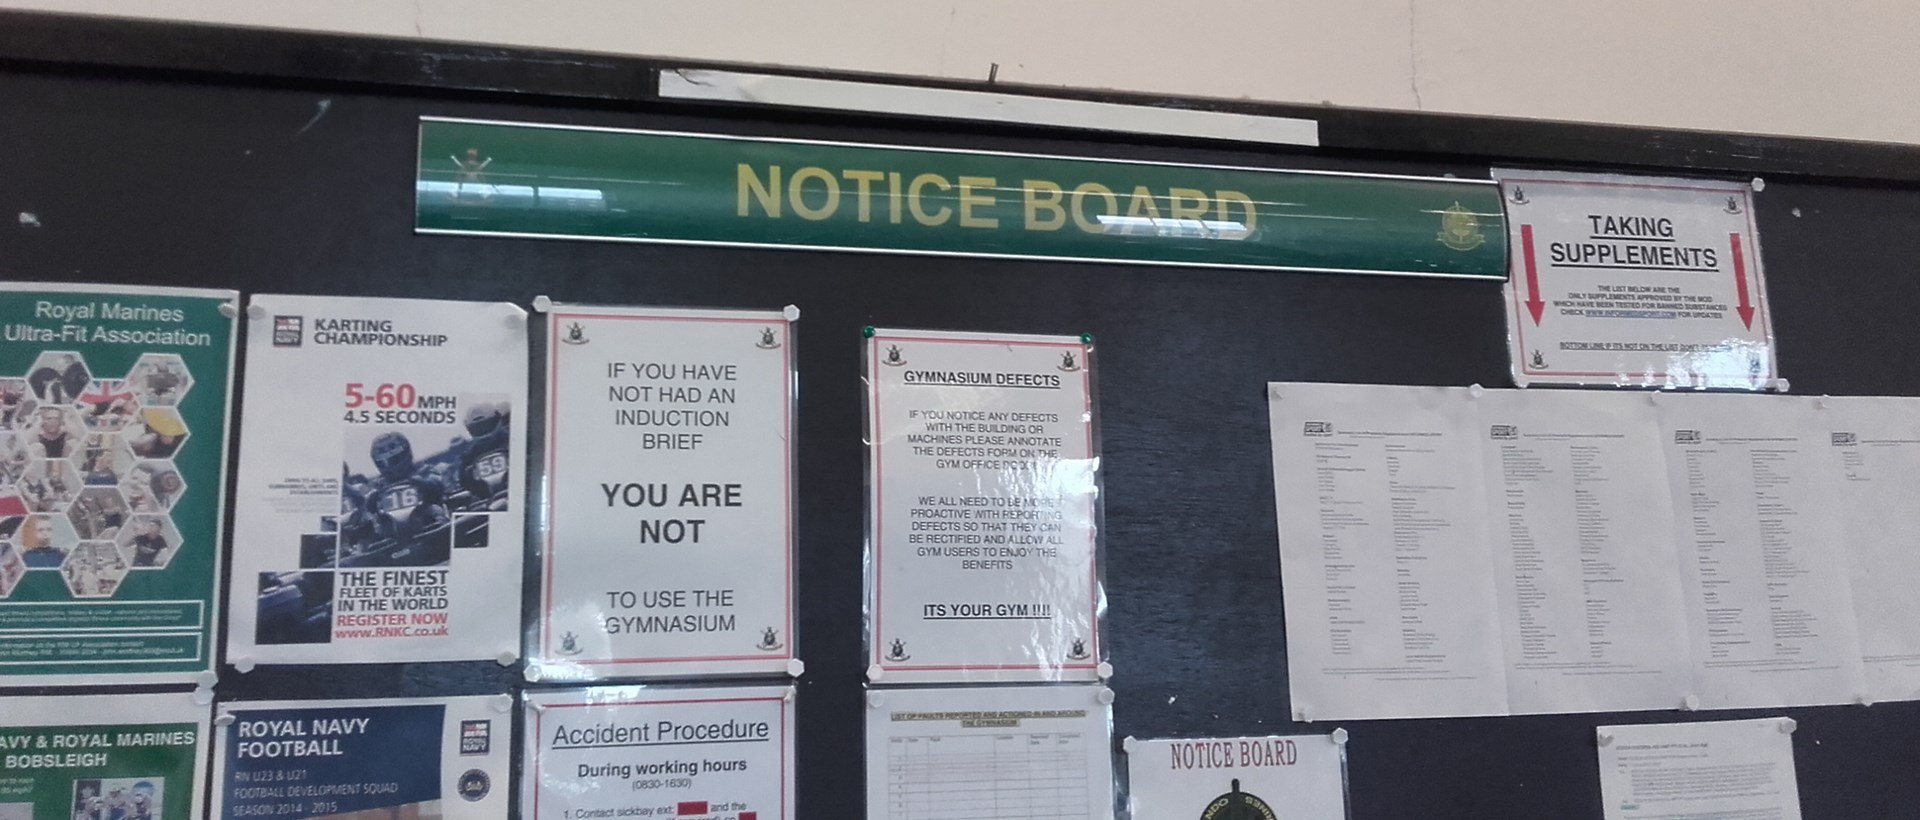 Branded notice board